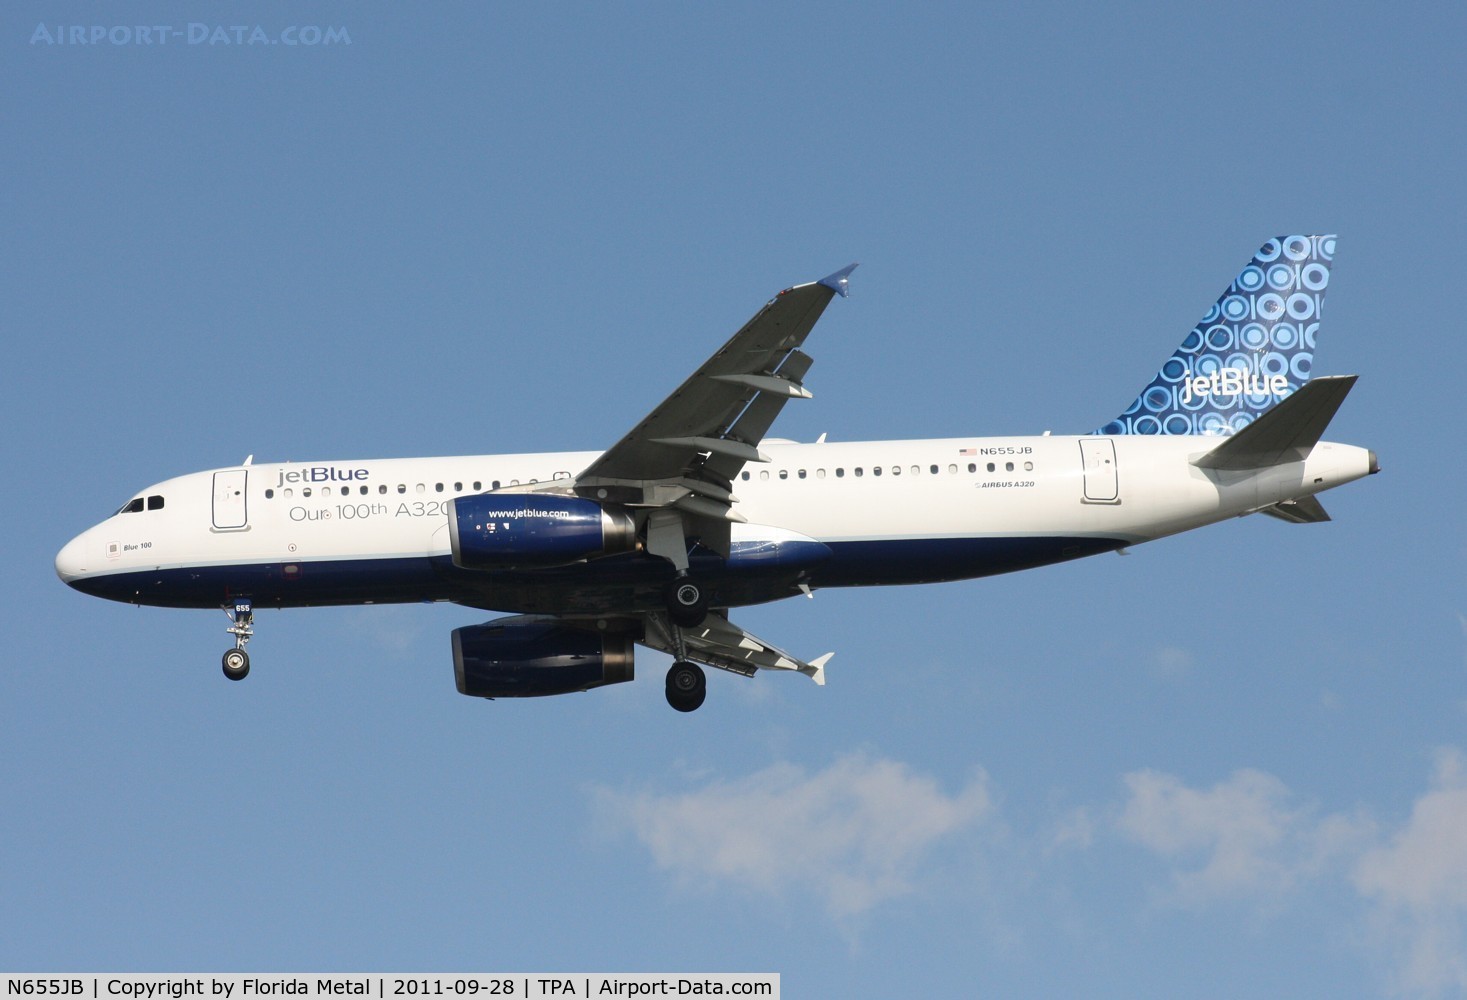 N655JB, 2007 Airbus A320-232 C/N 3072, Jet Blue's 100th A320